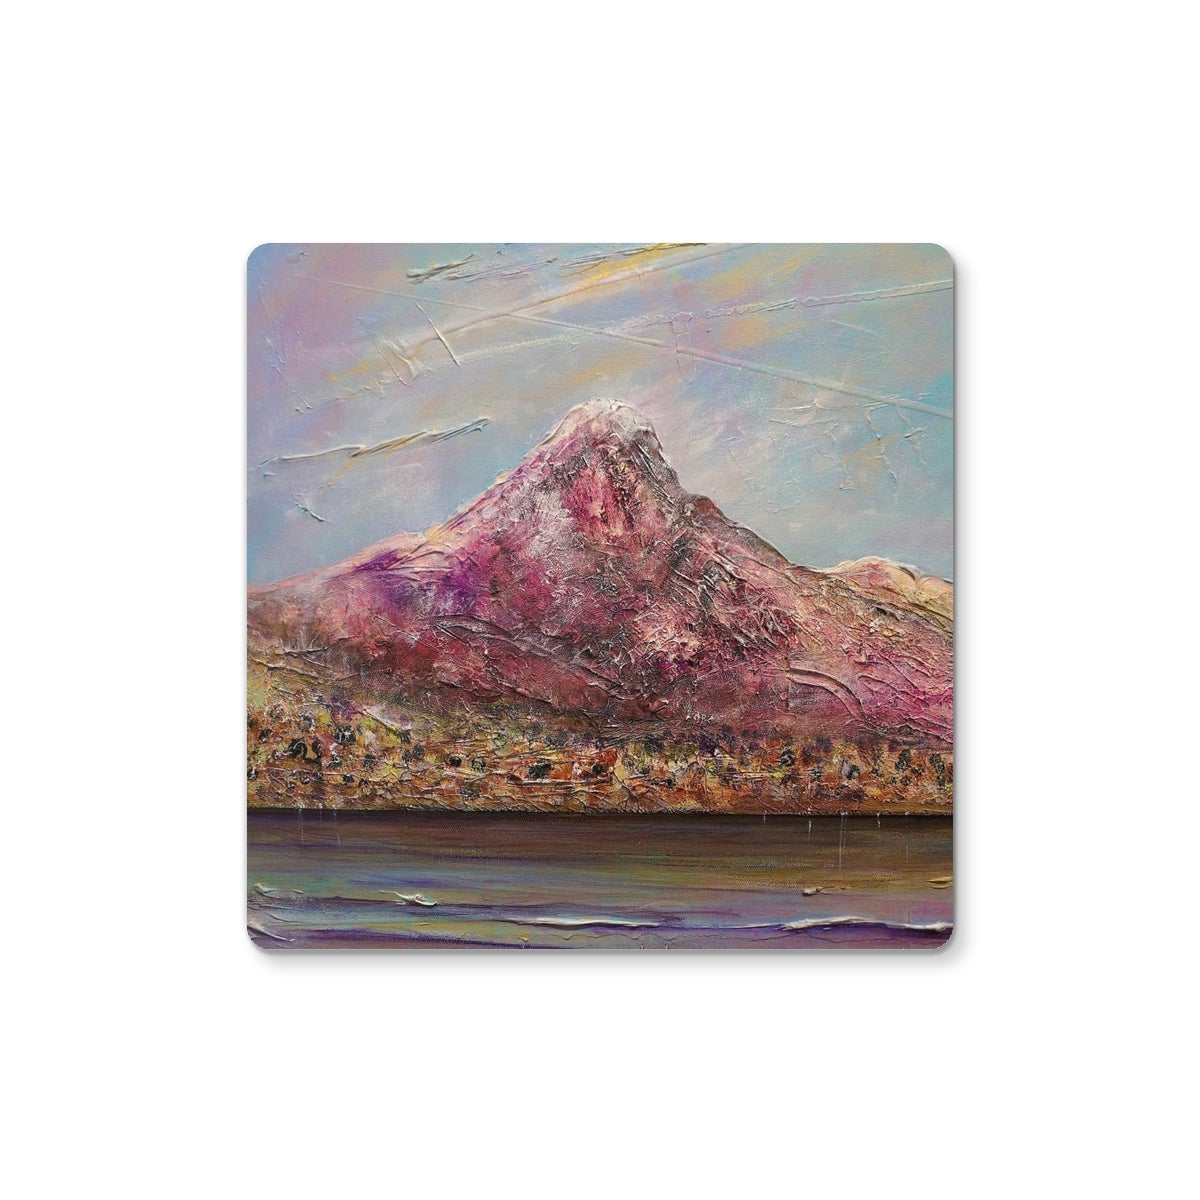 Ben Lomond Art Gifts Coaster-Homeware-Scottish Lochs & Mountains Art Gallery-Single Coaster-Paintings, Prints, Homeware, Art Gifts From Scotland By Scottish Artist Kevin Hunter